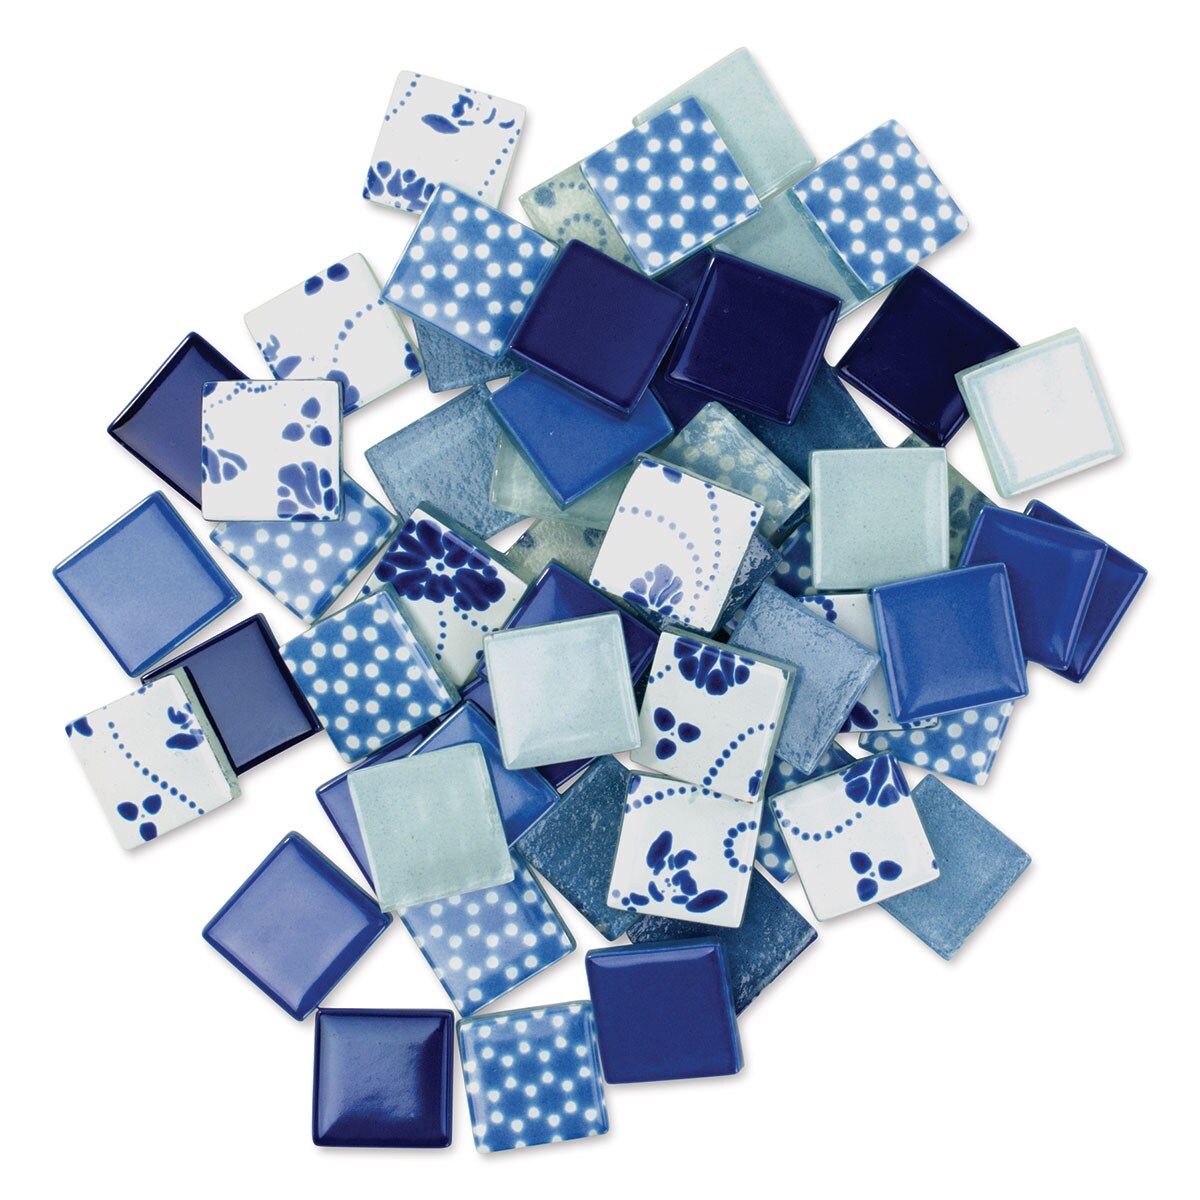 Mosaic Mercantile Patchwork Tiles - Royal/Ocean Blue, 1 lb